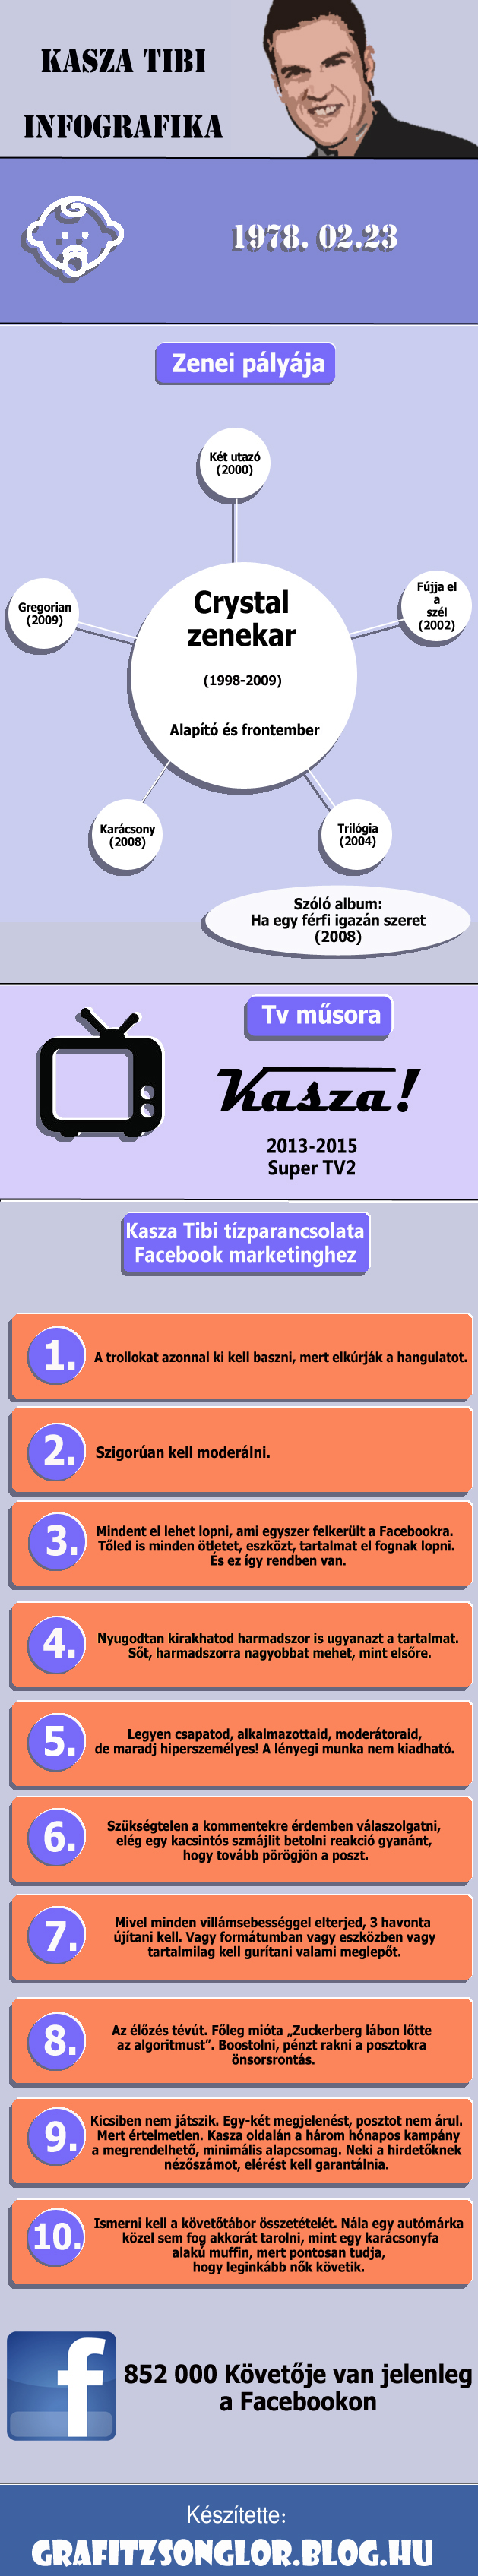 kasza_tibi_infografika_kesz_1.jpg